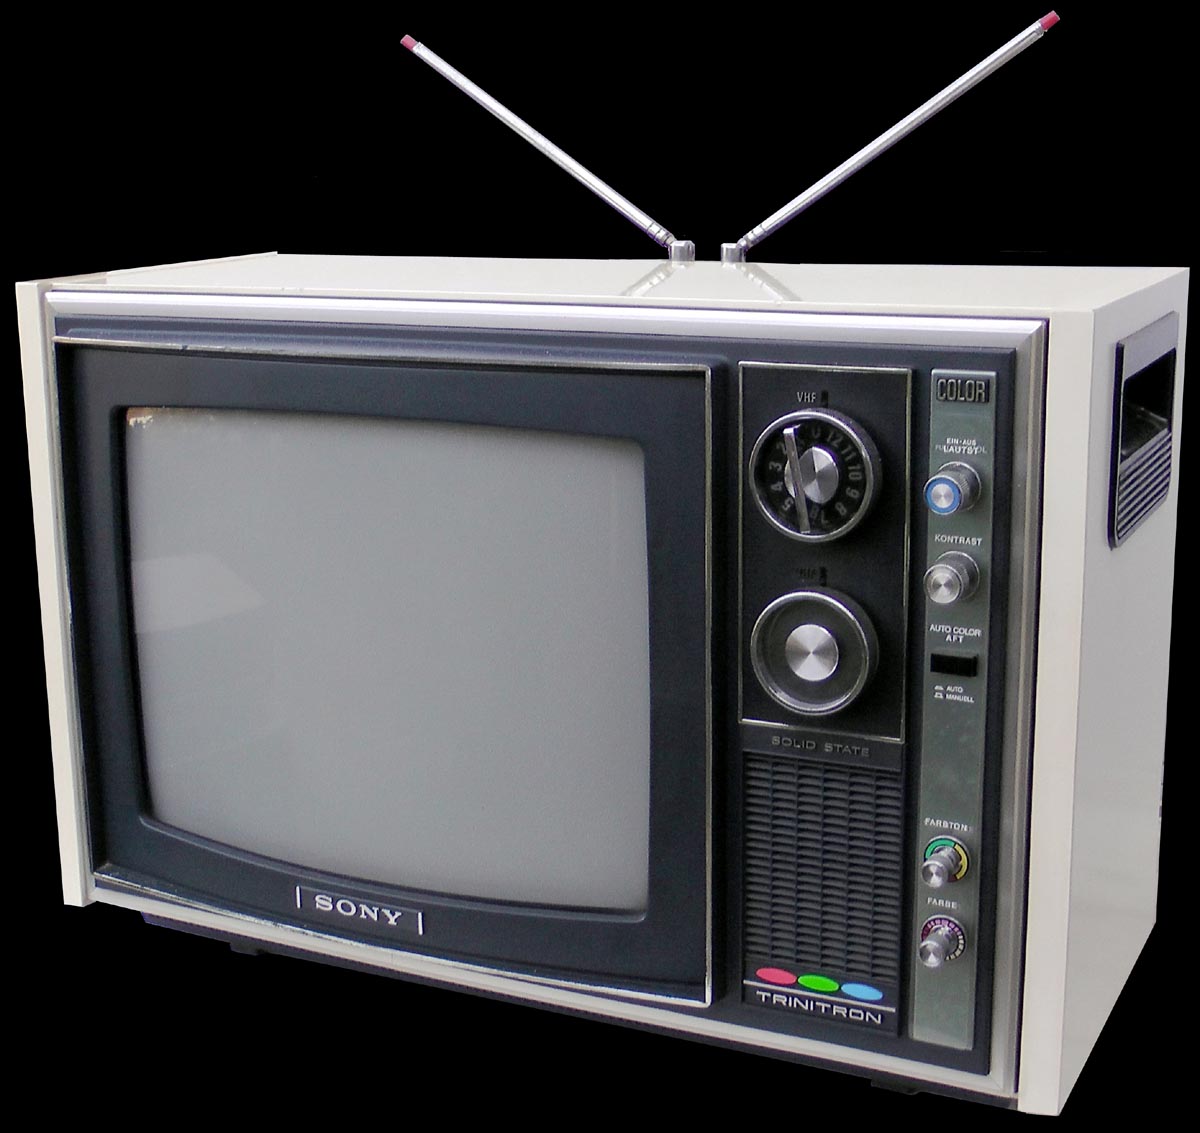 Sony KV-1310E white cabinet trinitron television